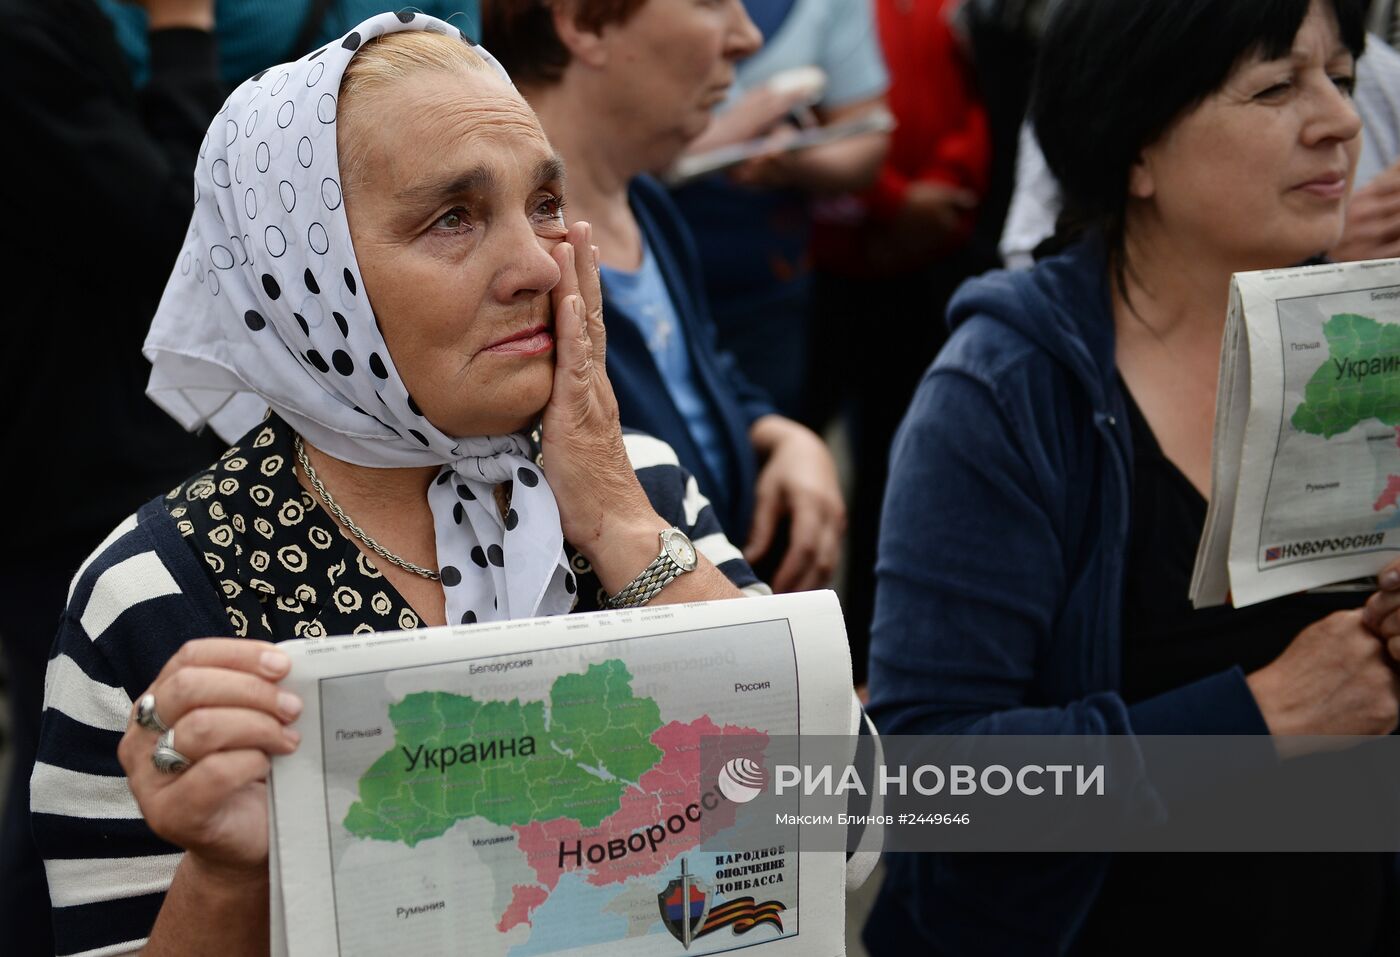 Митинг шахтеров в Донецке